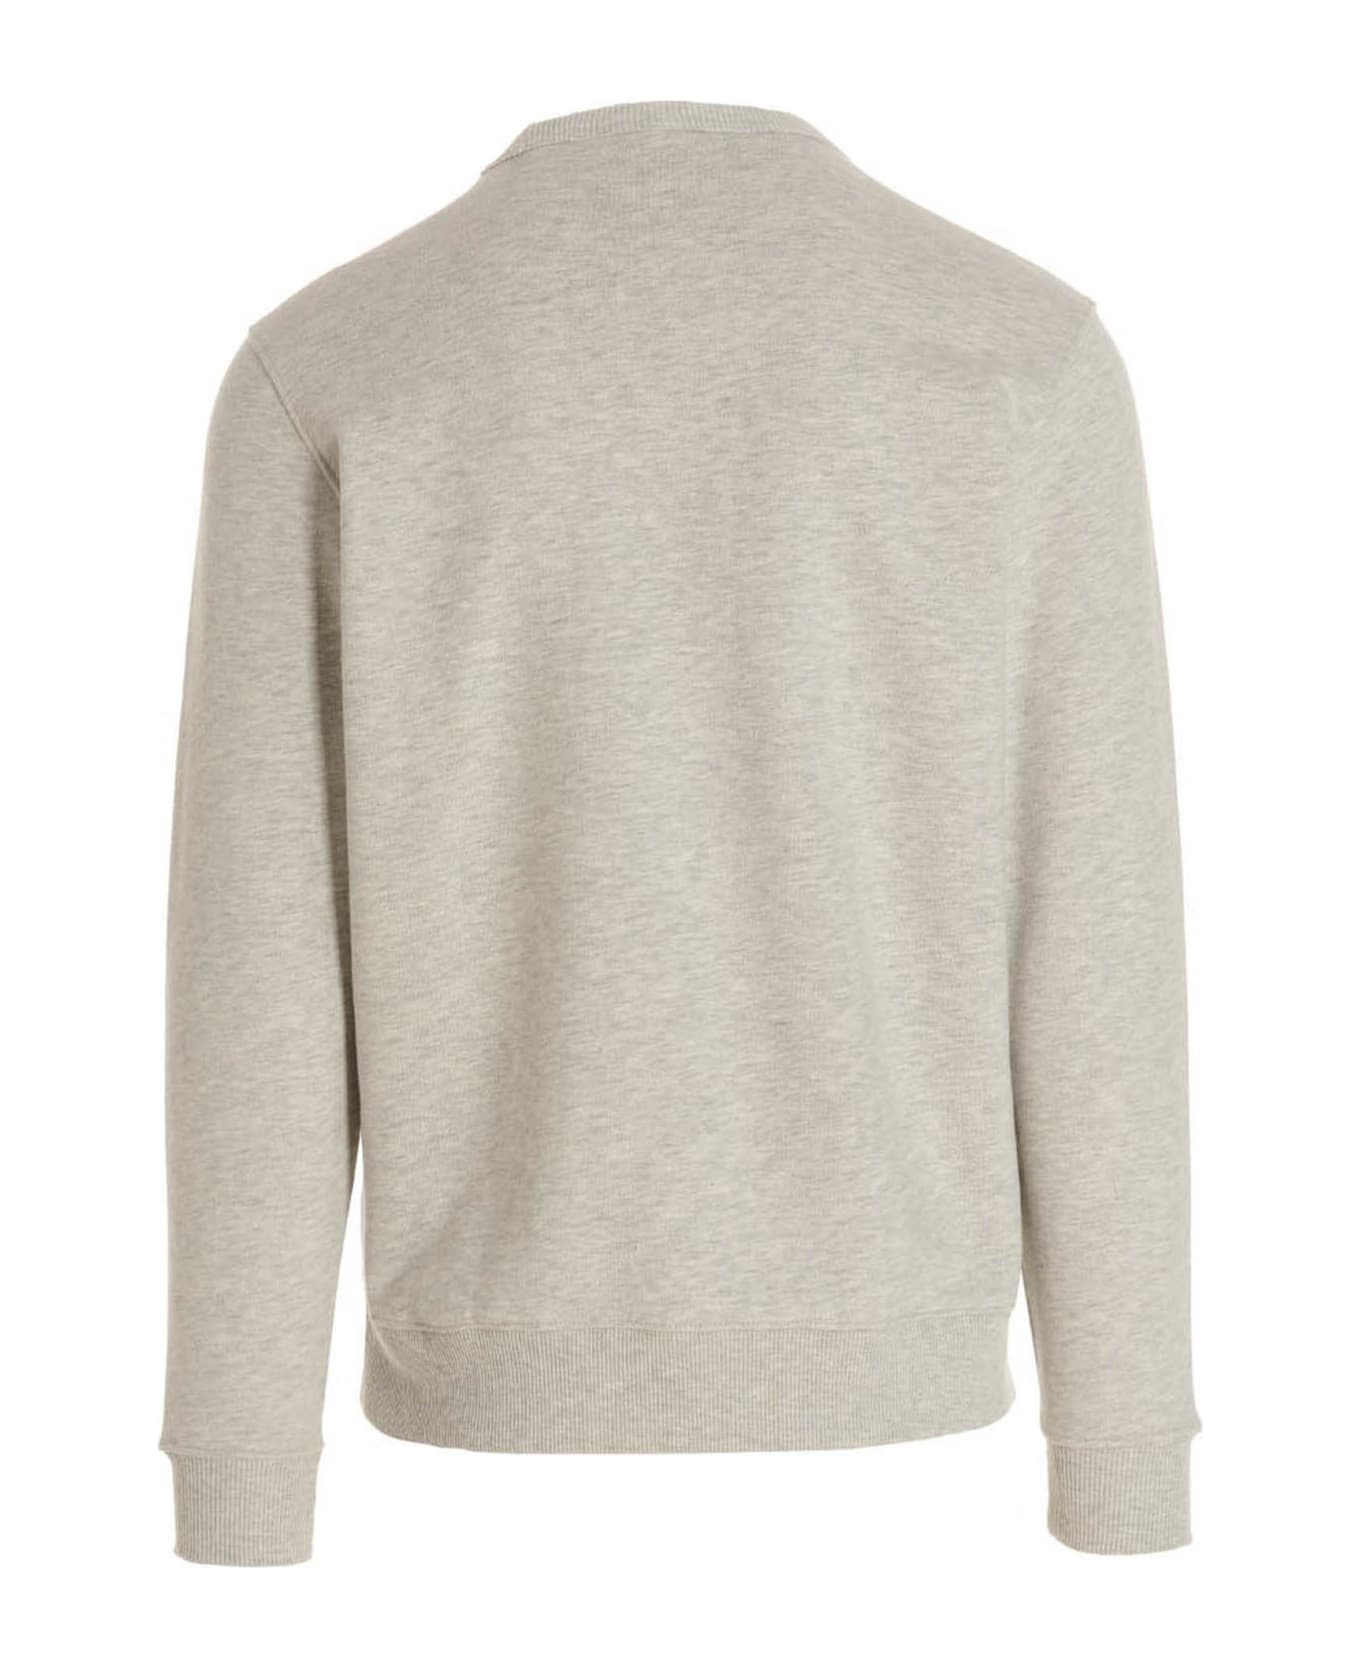 Dickies 'aitkin' Sweatshirt - Gray